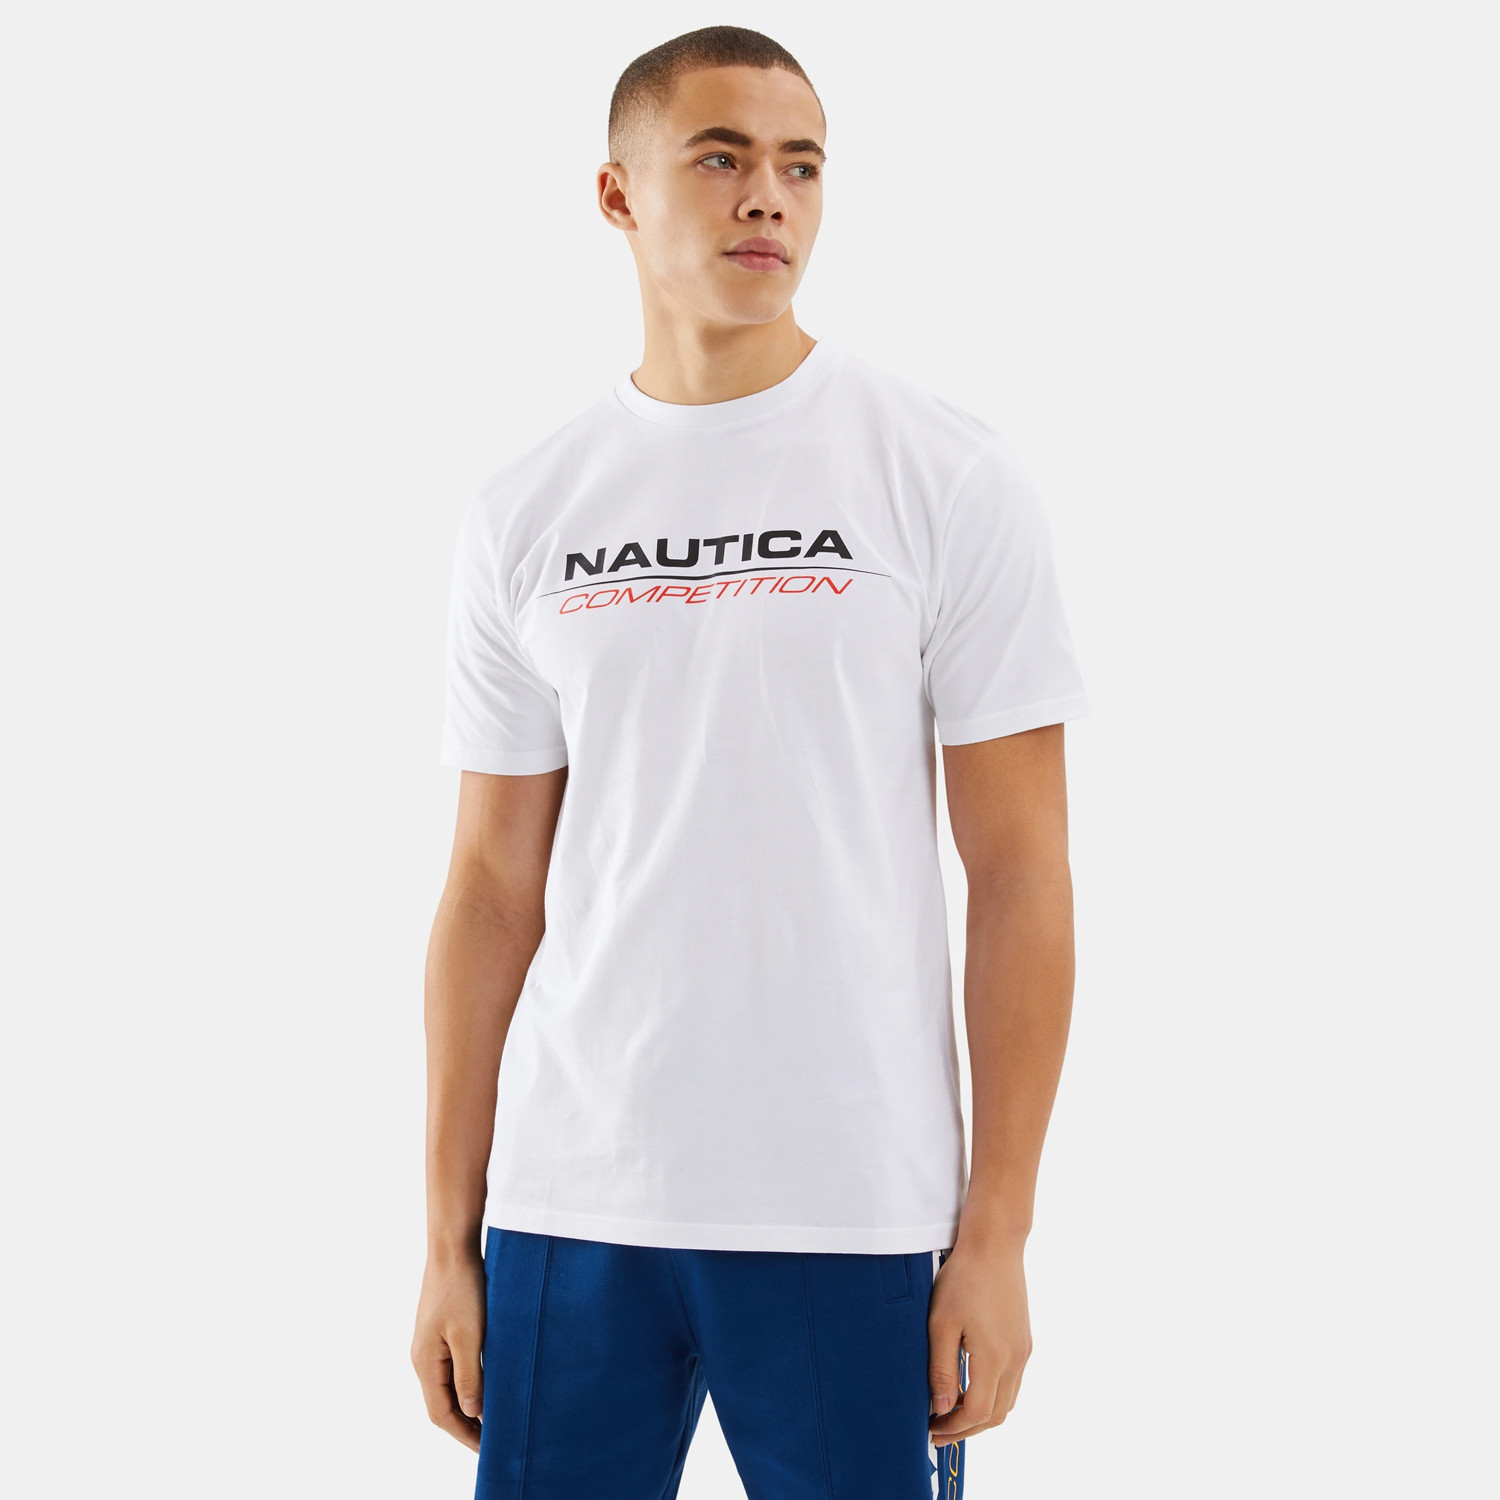 Nautica Competition Herman Vang Ανδρικό T-shirt (9000078670_1539)